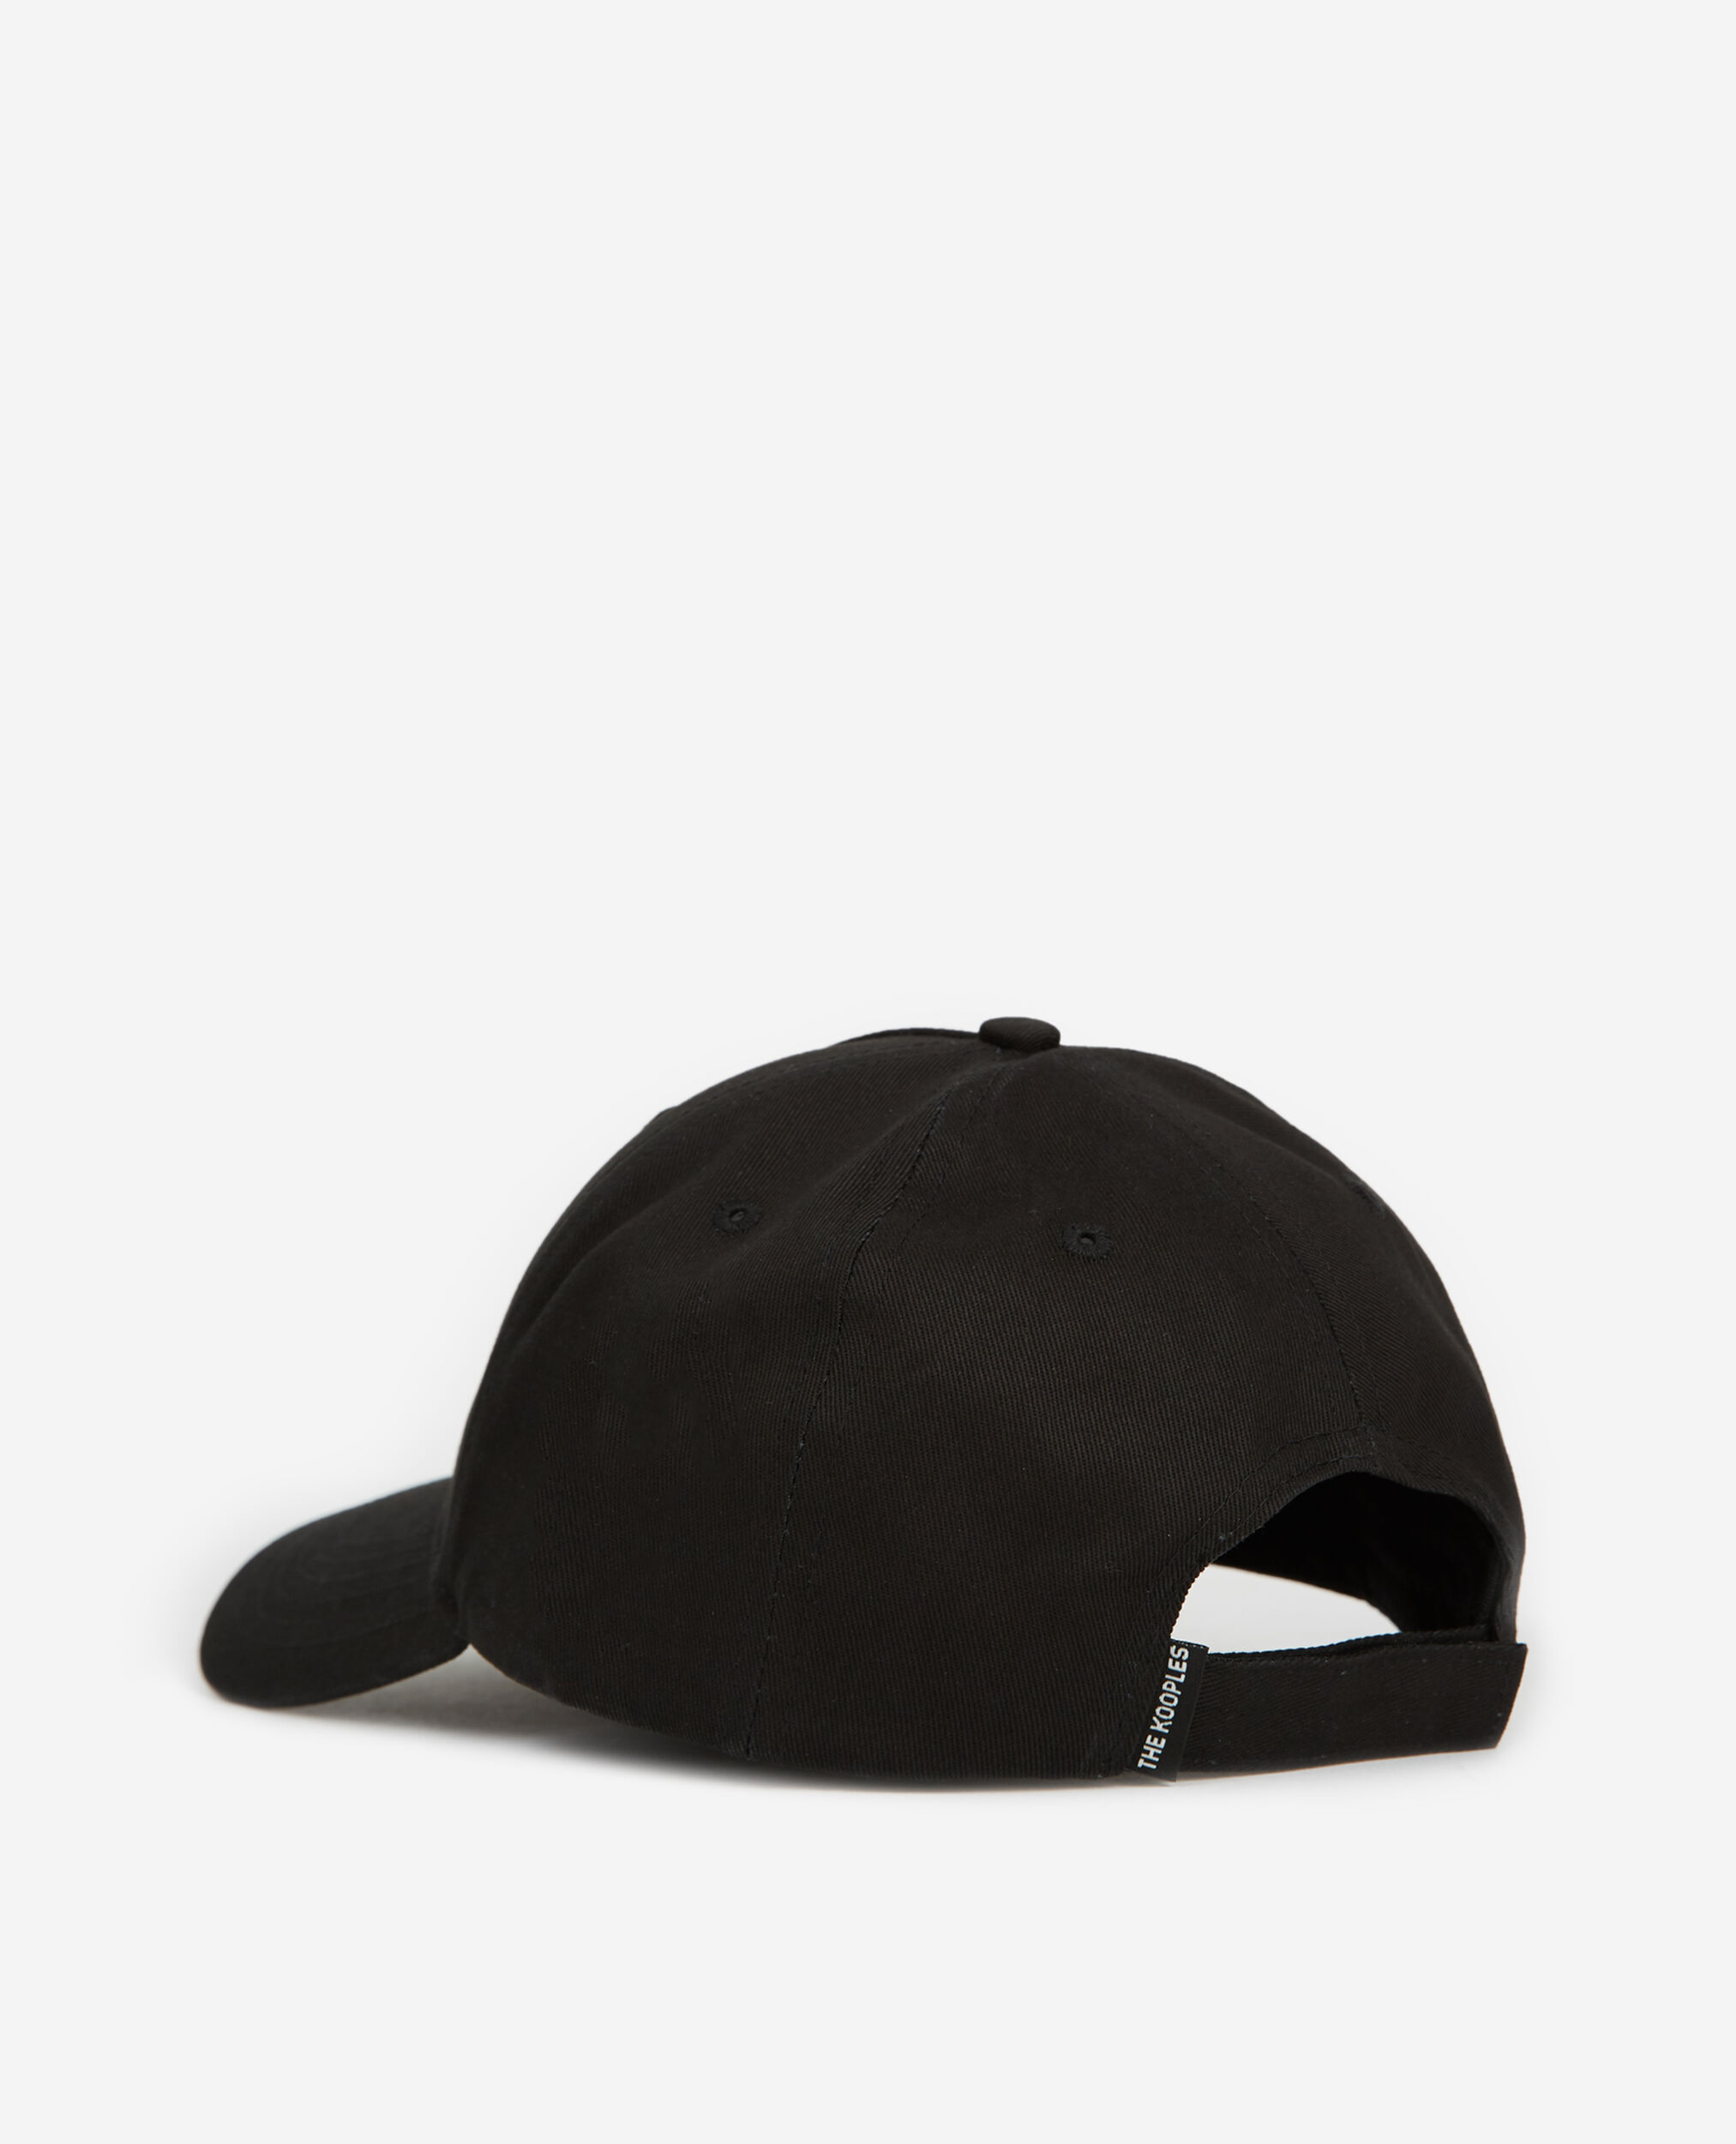 Black cotton cap with white logo, BLACK WHITE, hi-res image number null